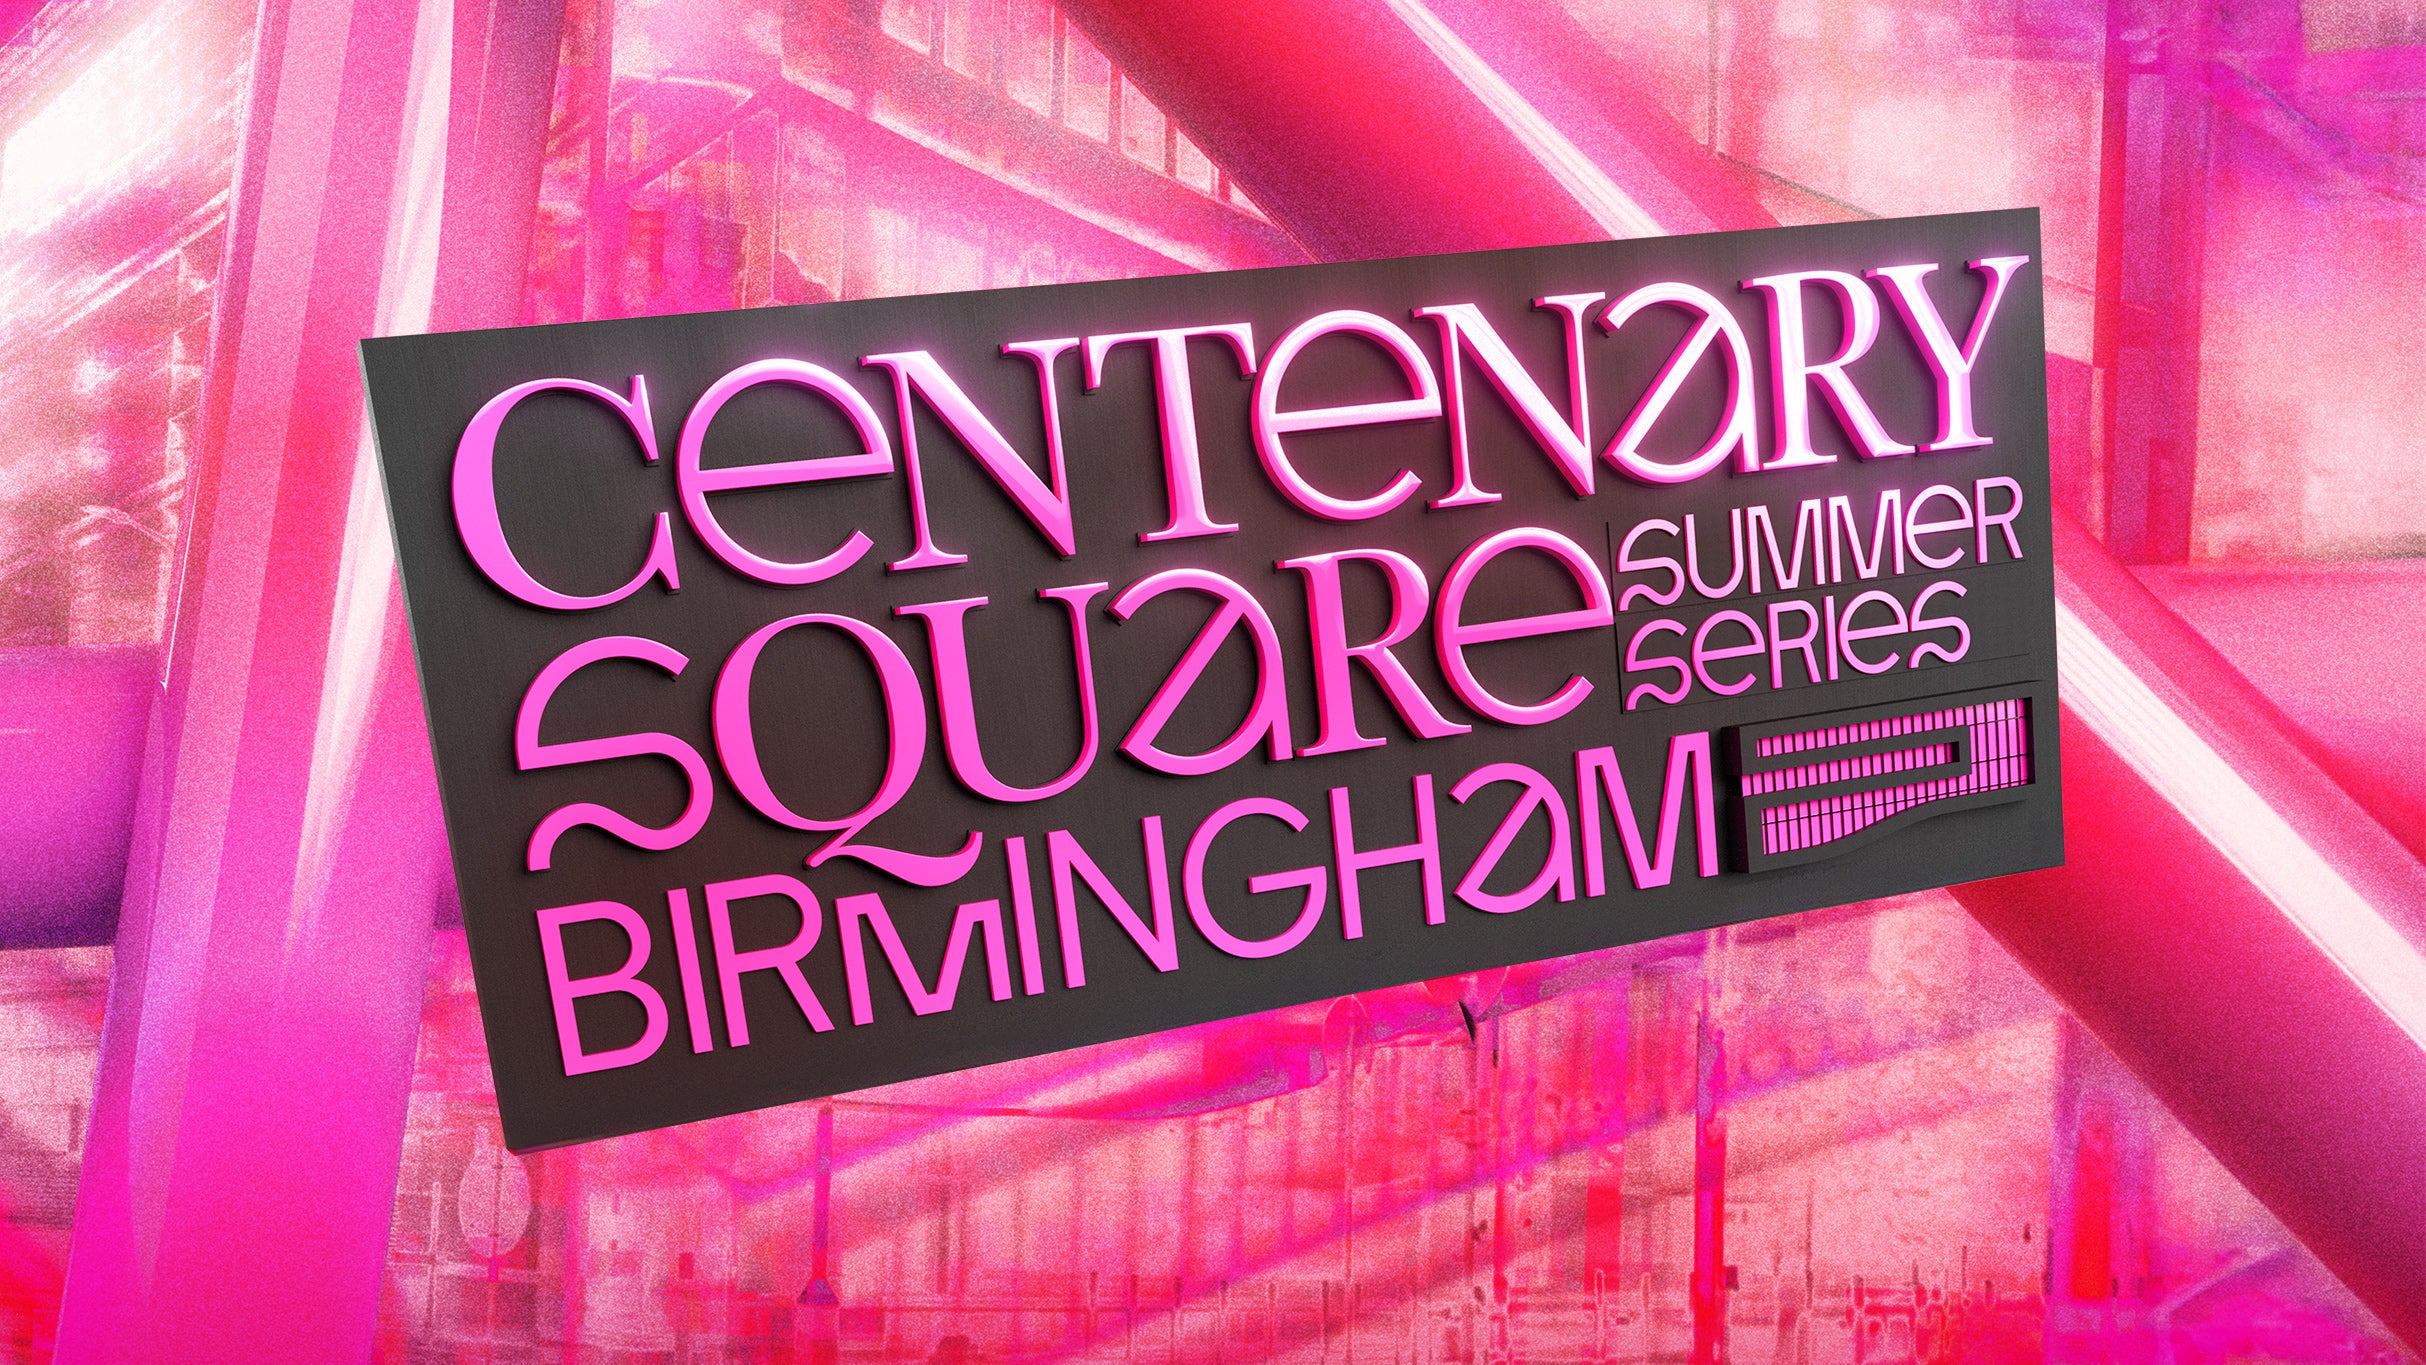 Centenary Square Summer Series: Cian Ducrot in Birmingham promo photo for Metropolis Music presale offer code